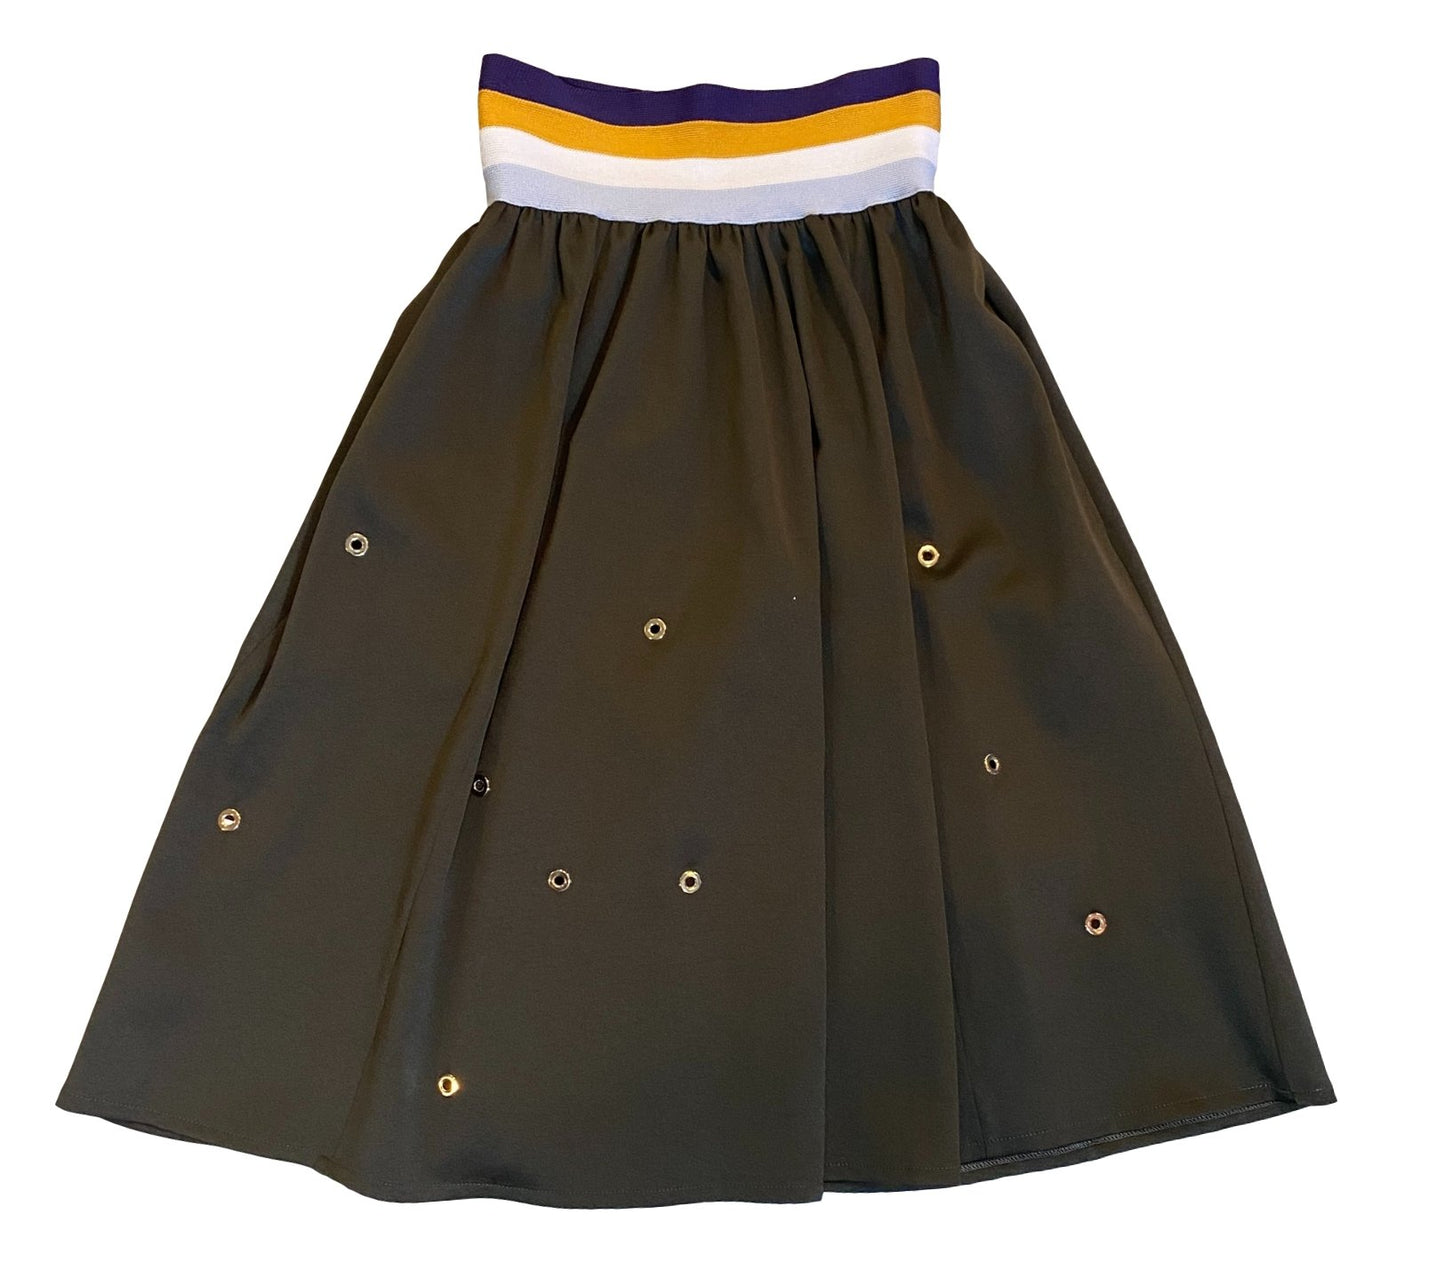 LI60Q-10-FLORENTINE-B Long Skirt with Multicolored Band